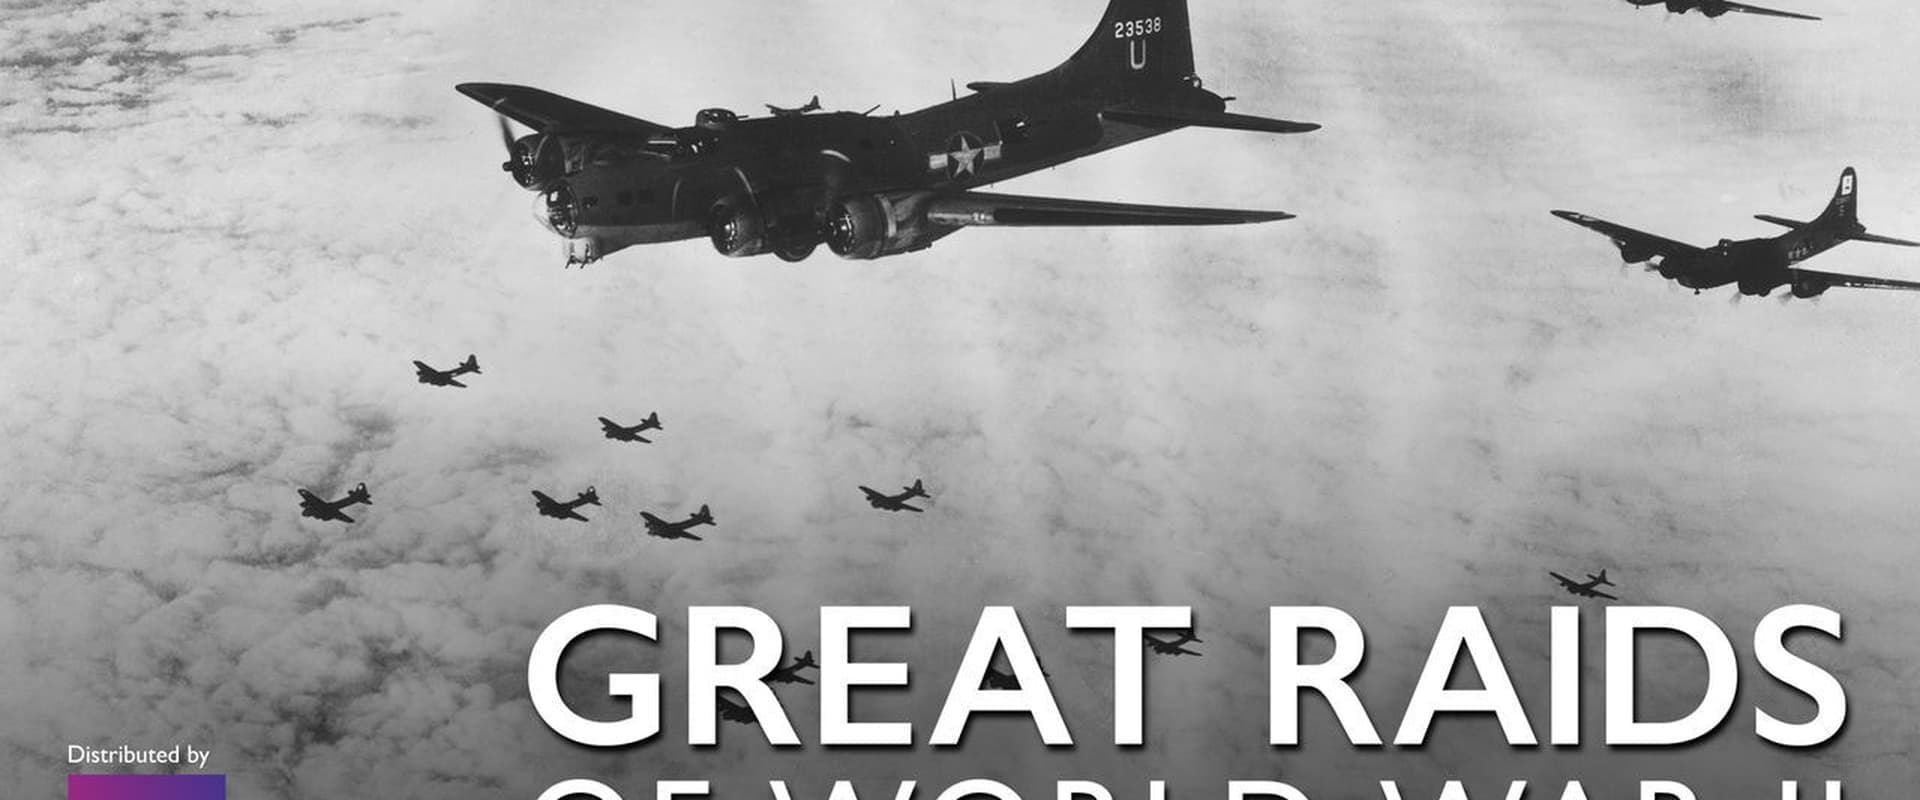 Great Raids of World War II